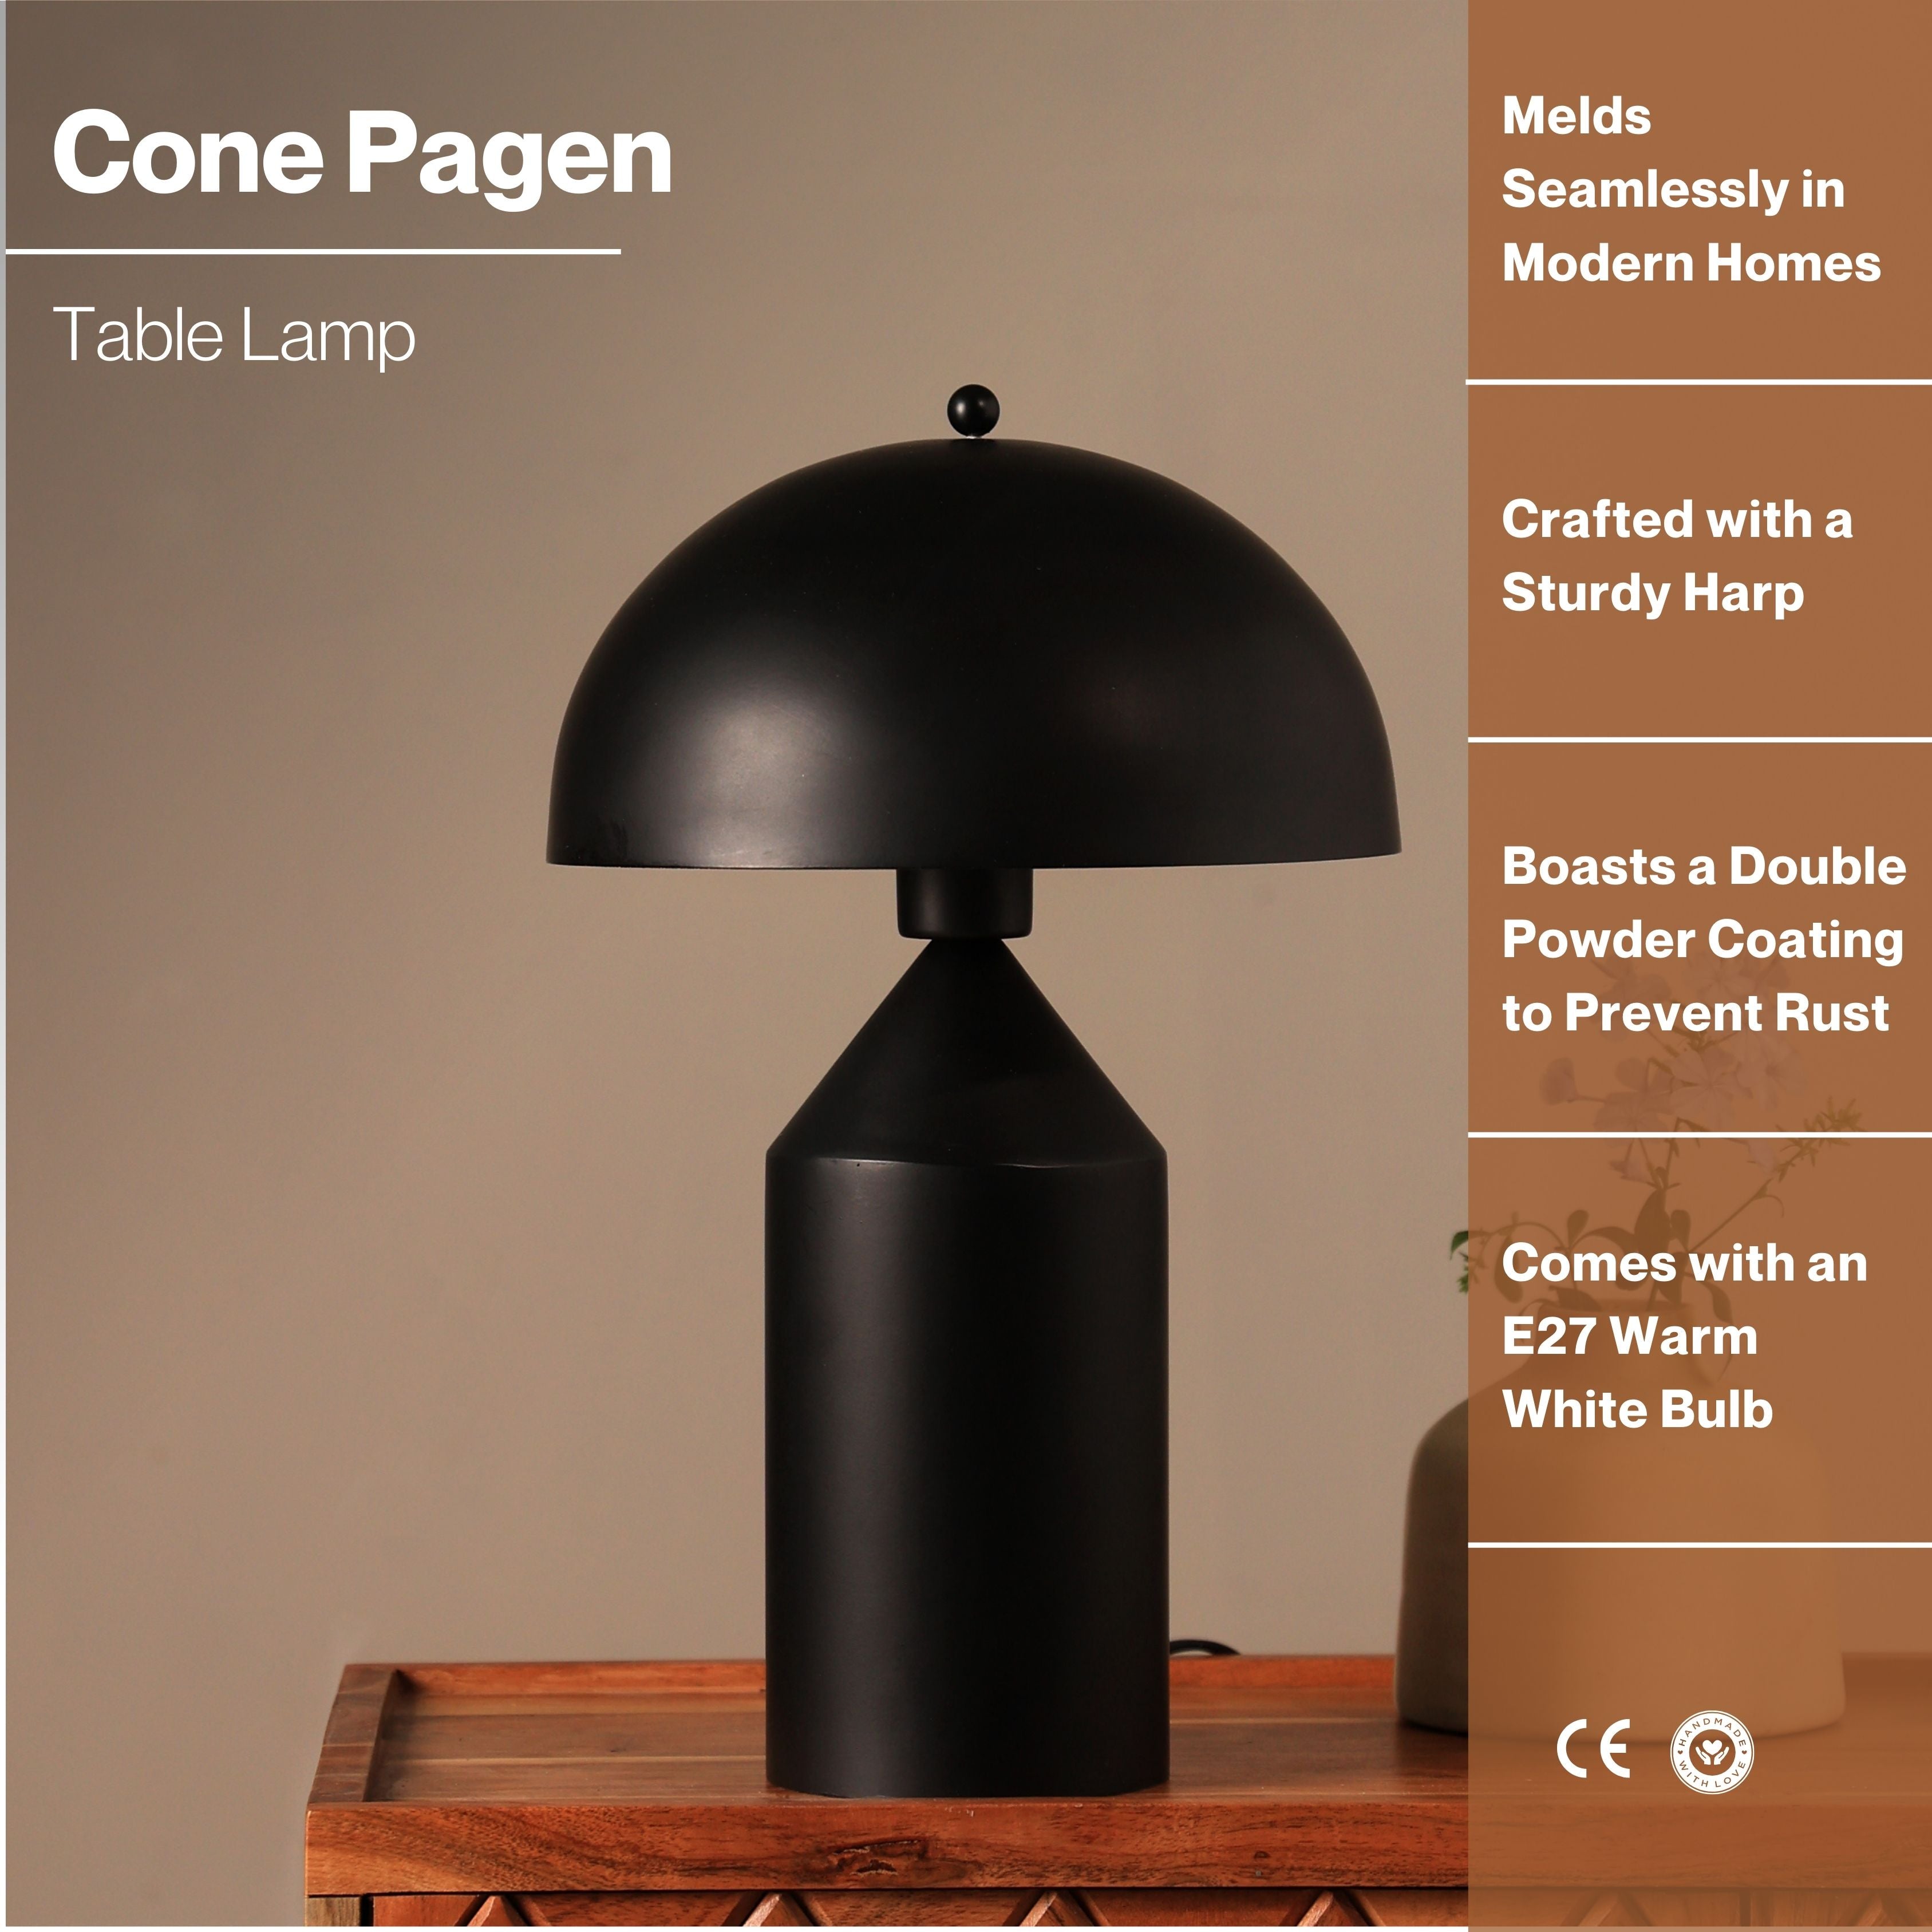 CONE PAGEN - TABLE LAMP - MODERN SCANDINAVIAN DESIGN DESK LAMP, PREMIUM METALLIC FINISH, EASY INSTALLATION